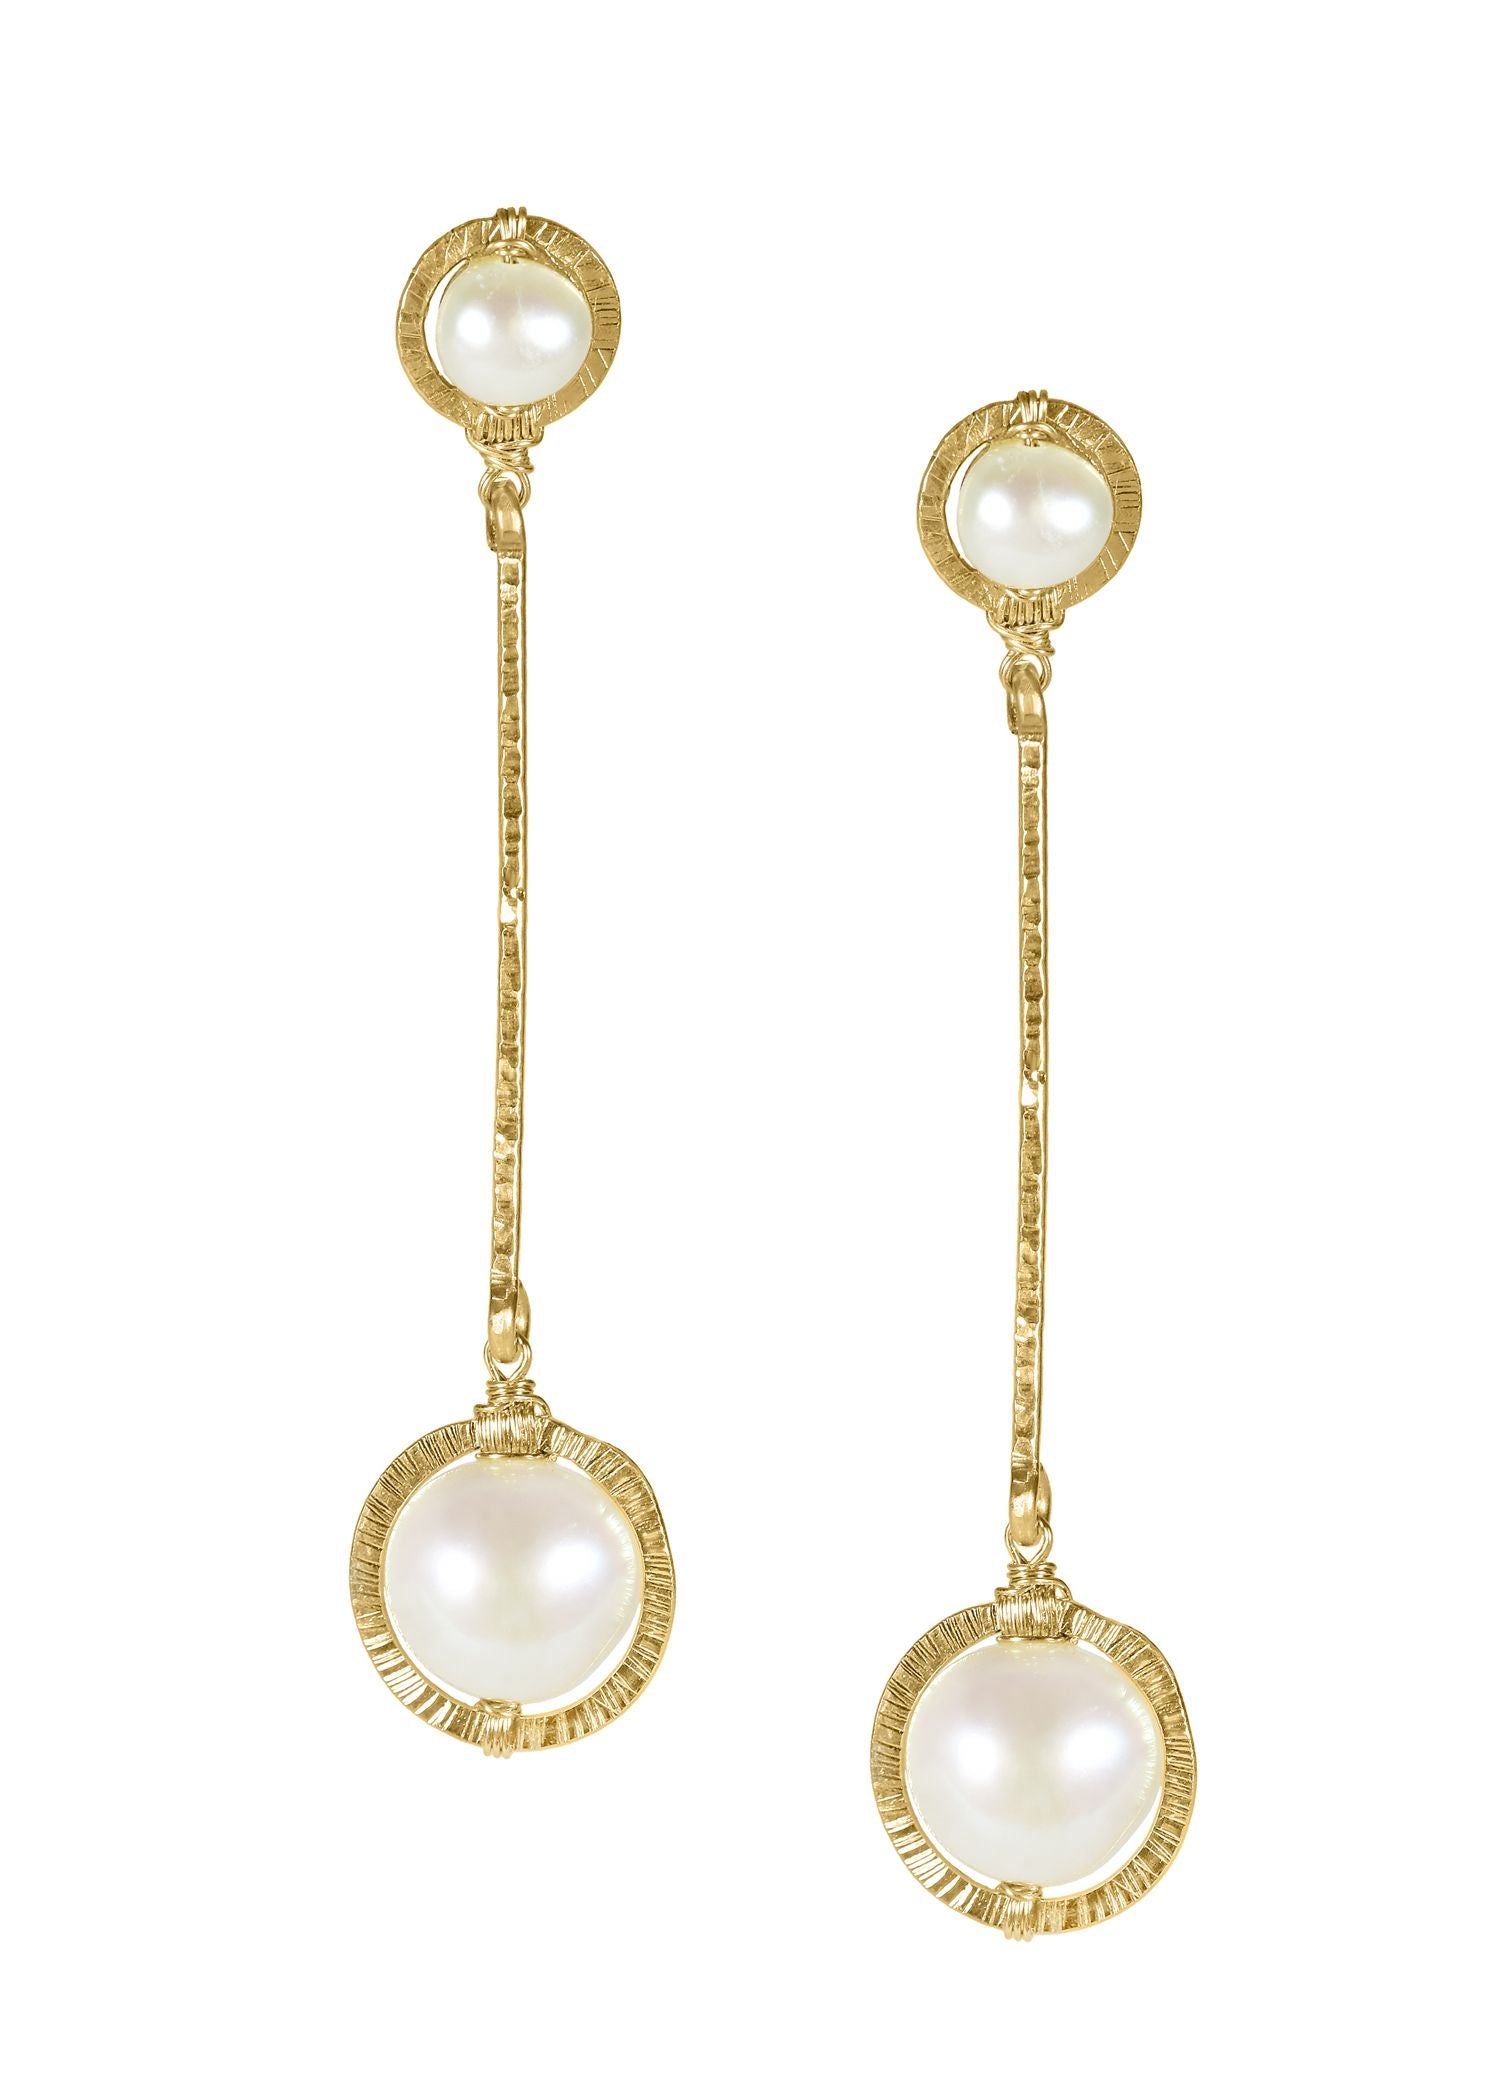 Fresh water pearls 14k gold fill Earrings measure 2-1/16" in length and 7/16" in width Handmade in our Los Angeles studio